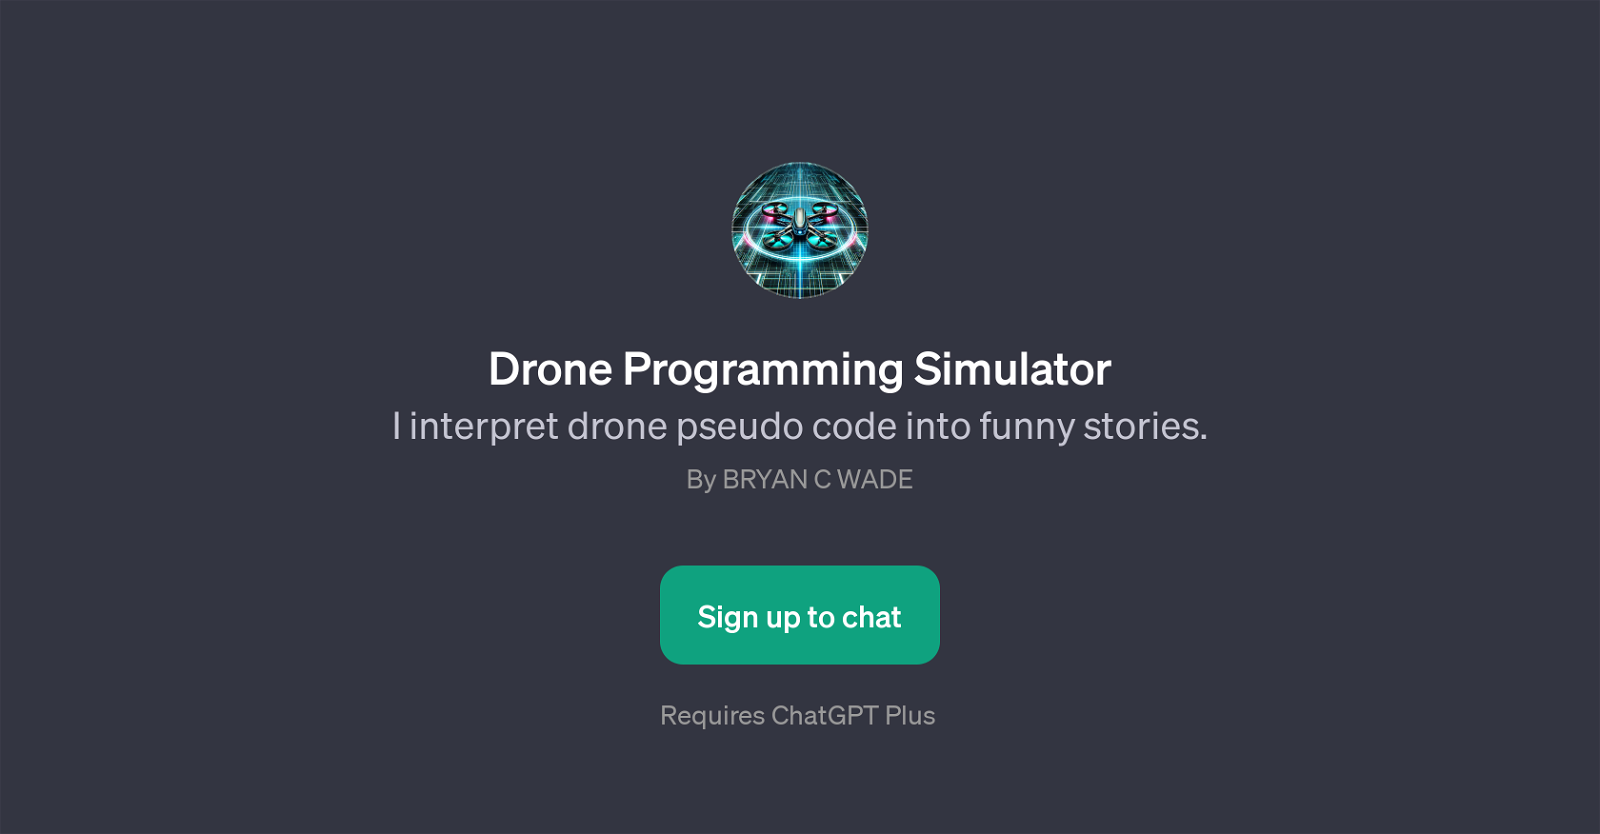 Drone Programming Simulator website